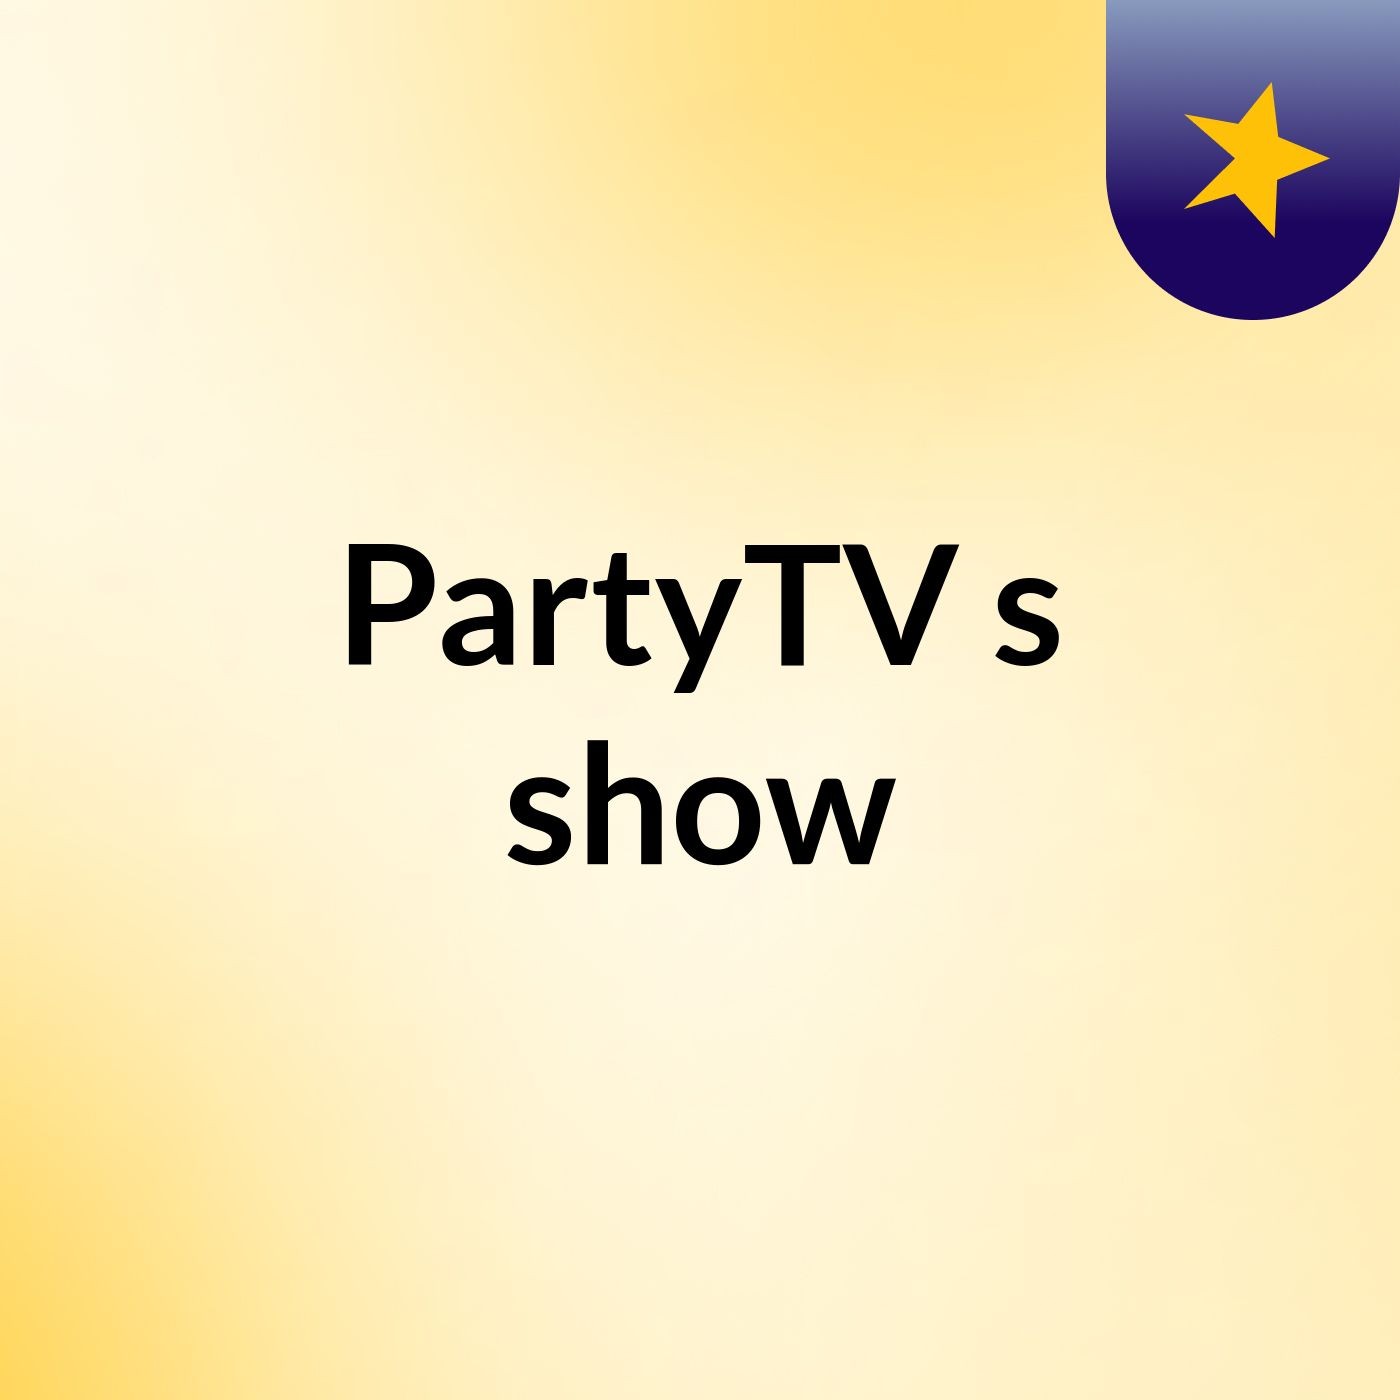 PartyTV's show